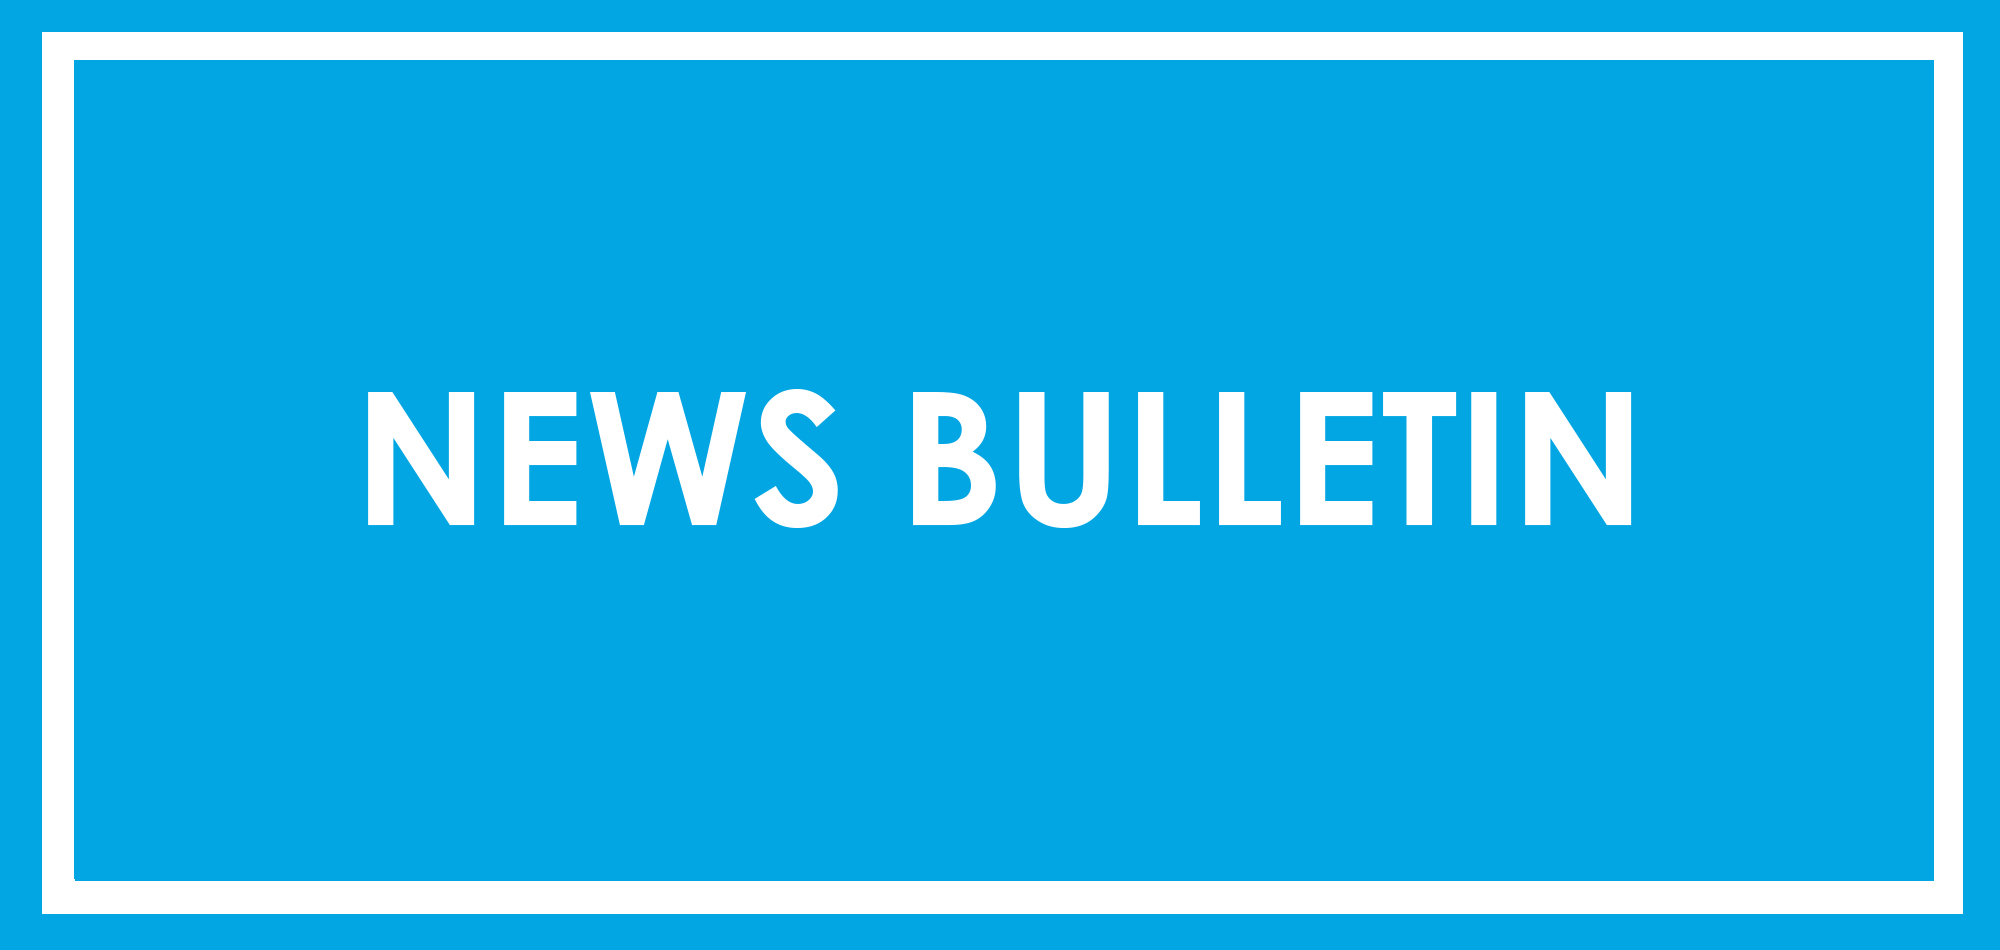 News Bulletin - 06.04.21